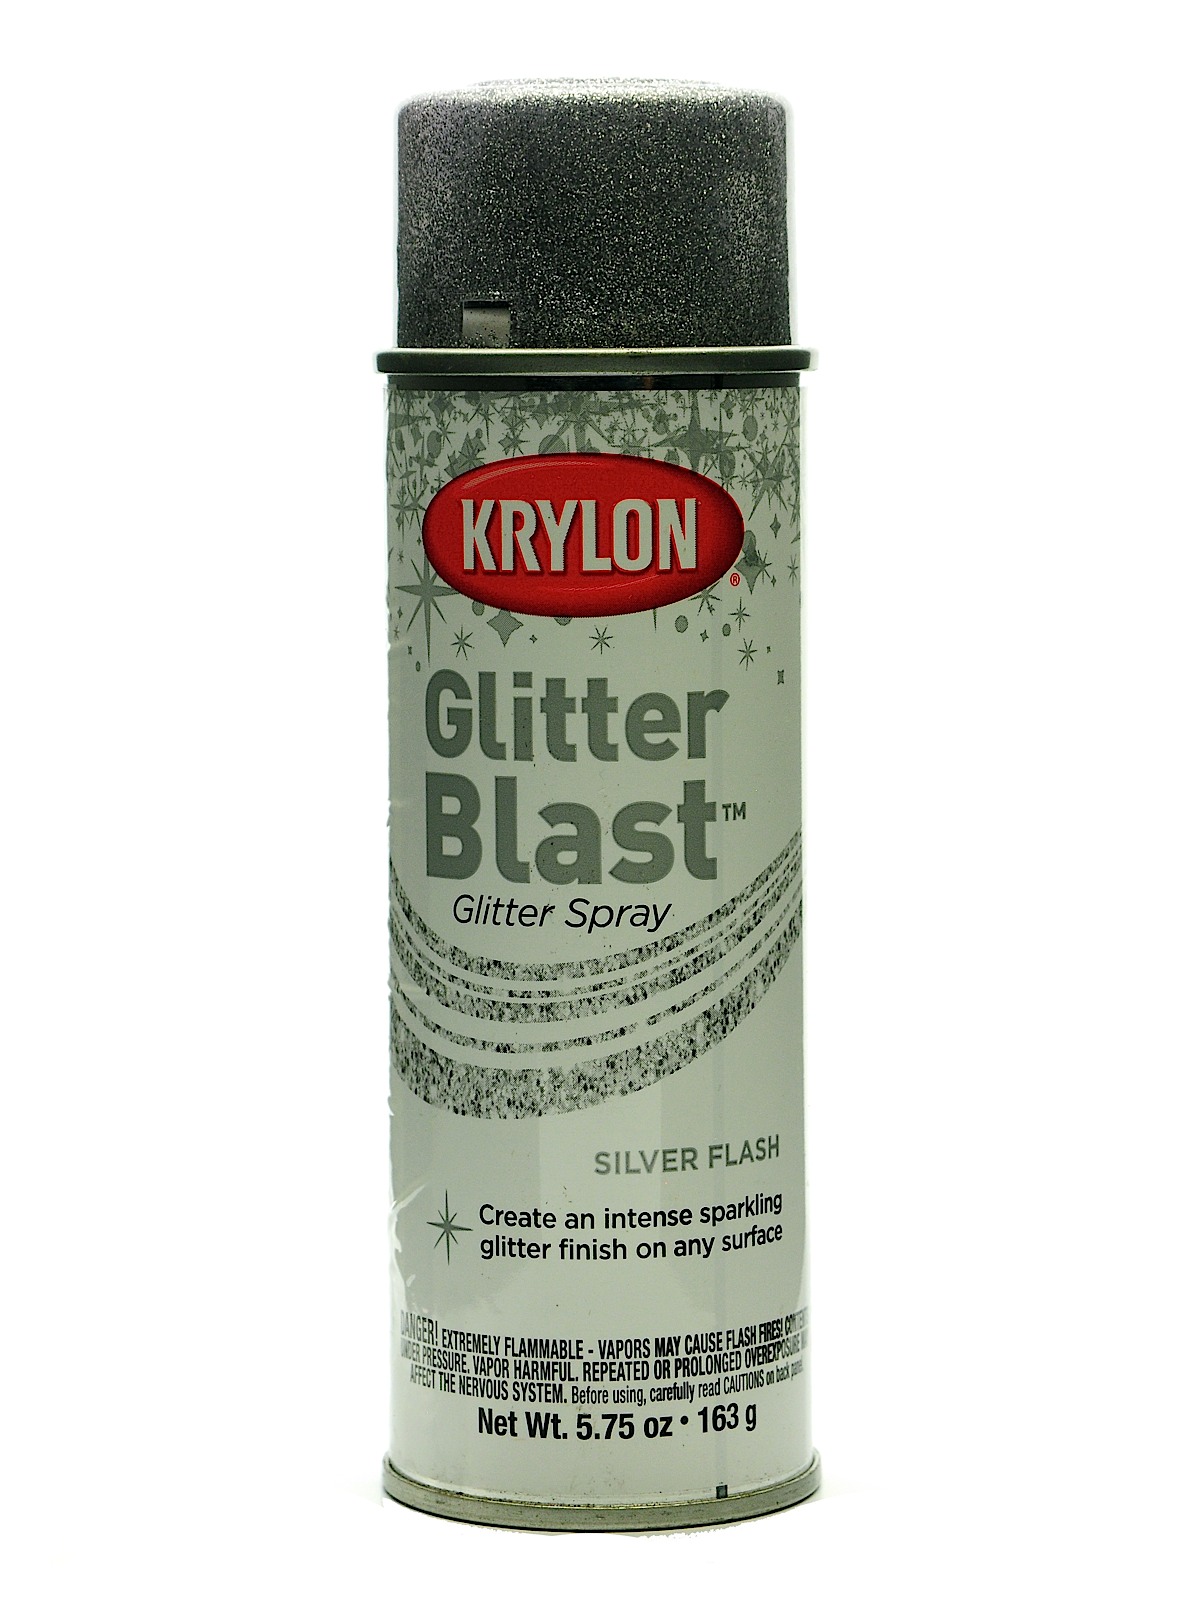 Glitter Blast Spray Paints Silver Flash 5 3 4 Oz.